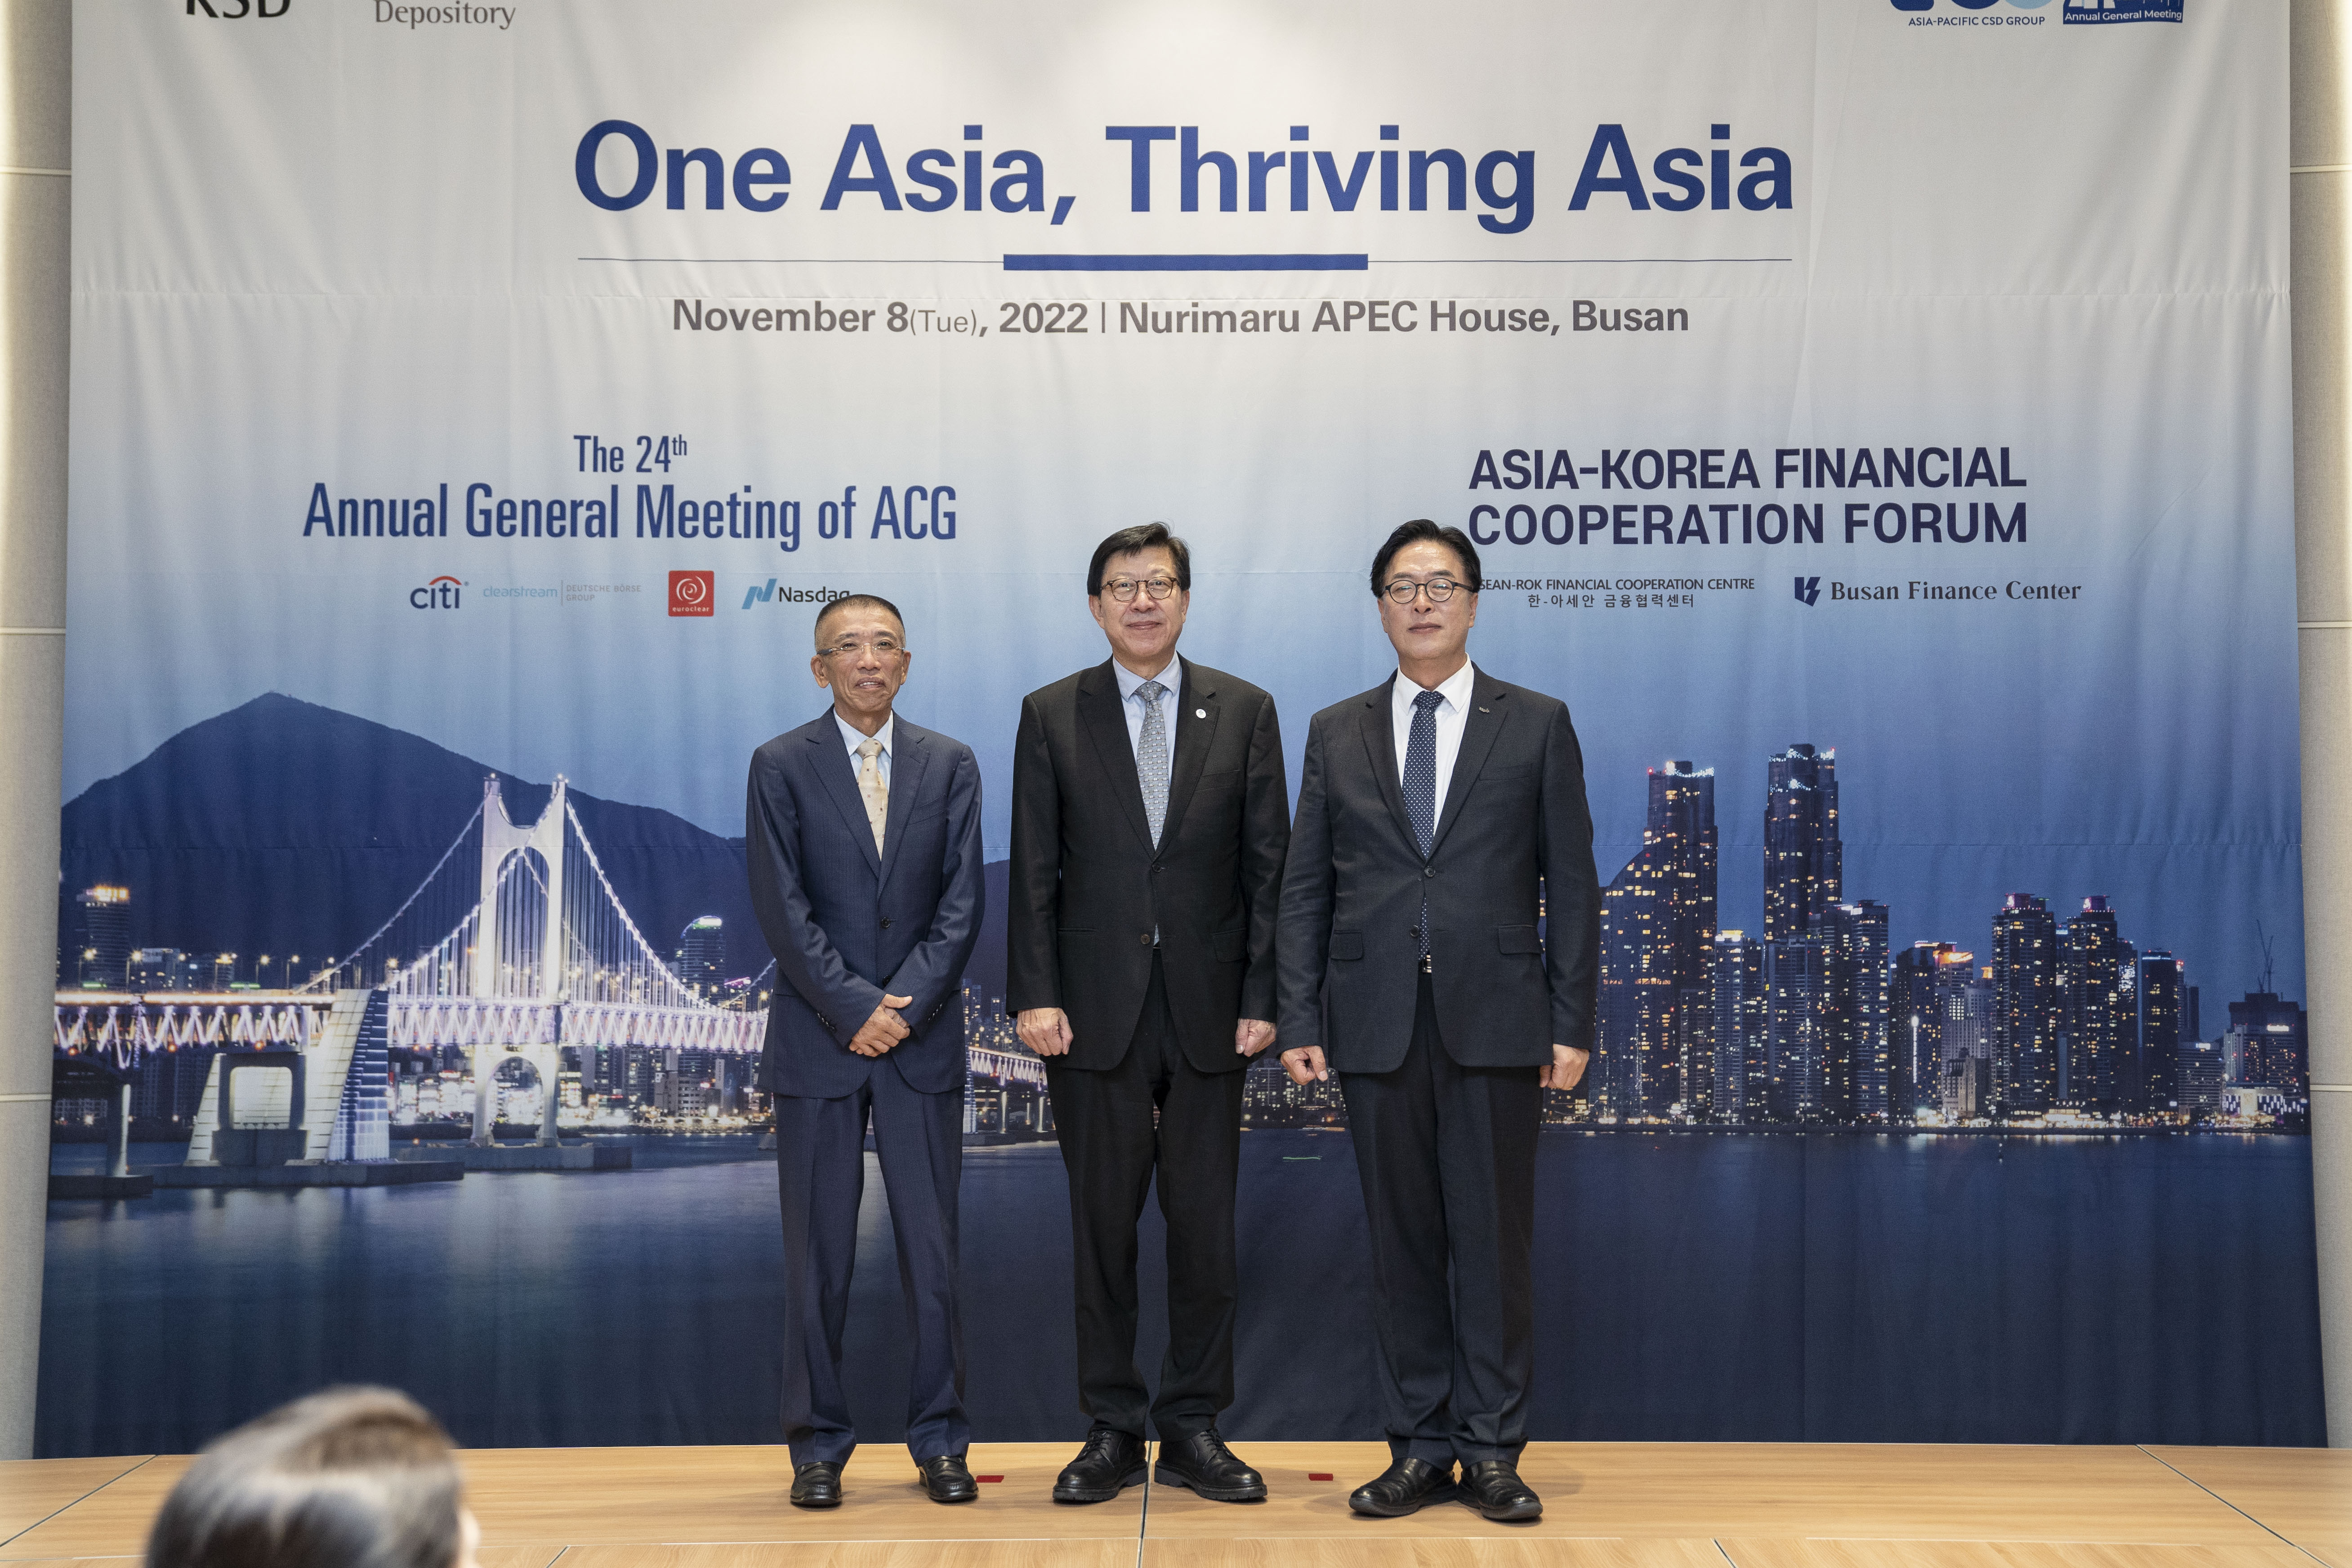 20221108 On Asia, Thriving Asia 금융기관장 대상 엑스포 유치 홍보 리셉션 (APEC 누리마루) 사진8